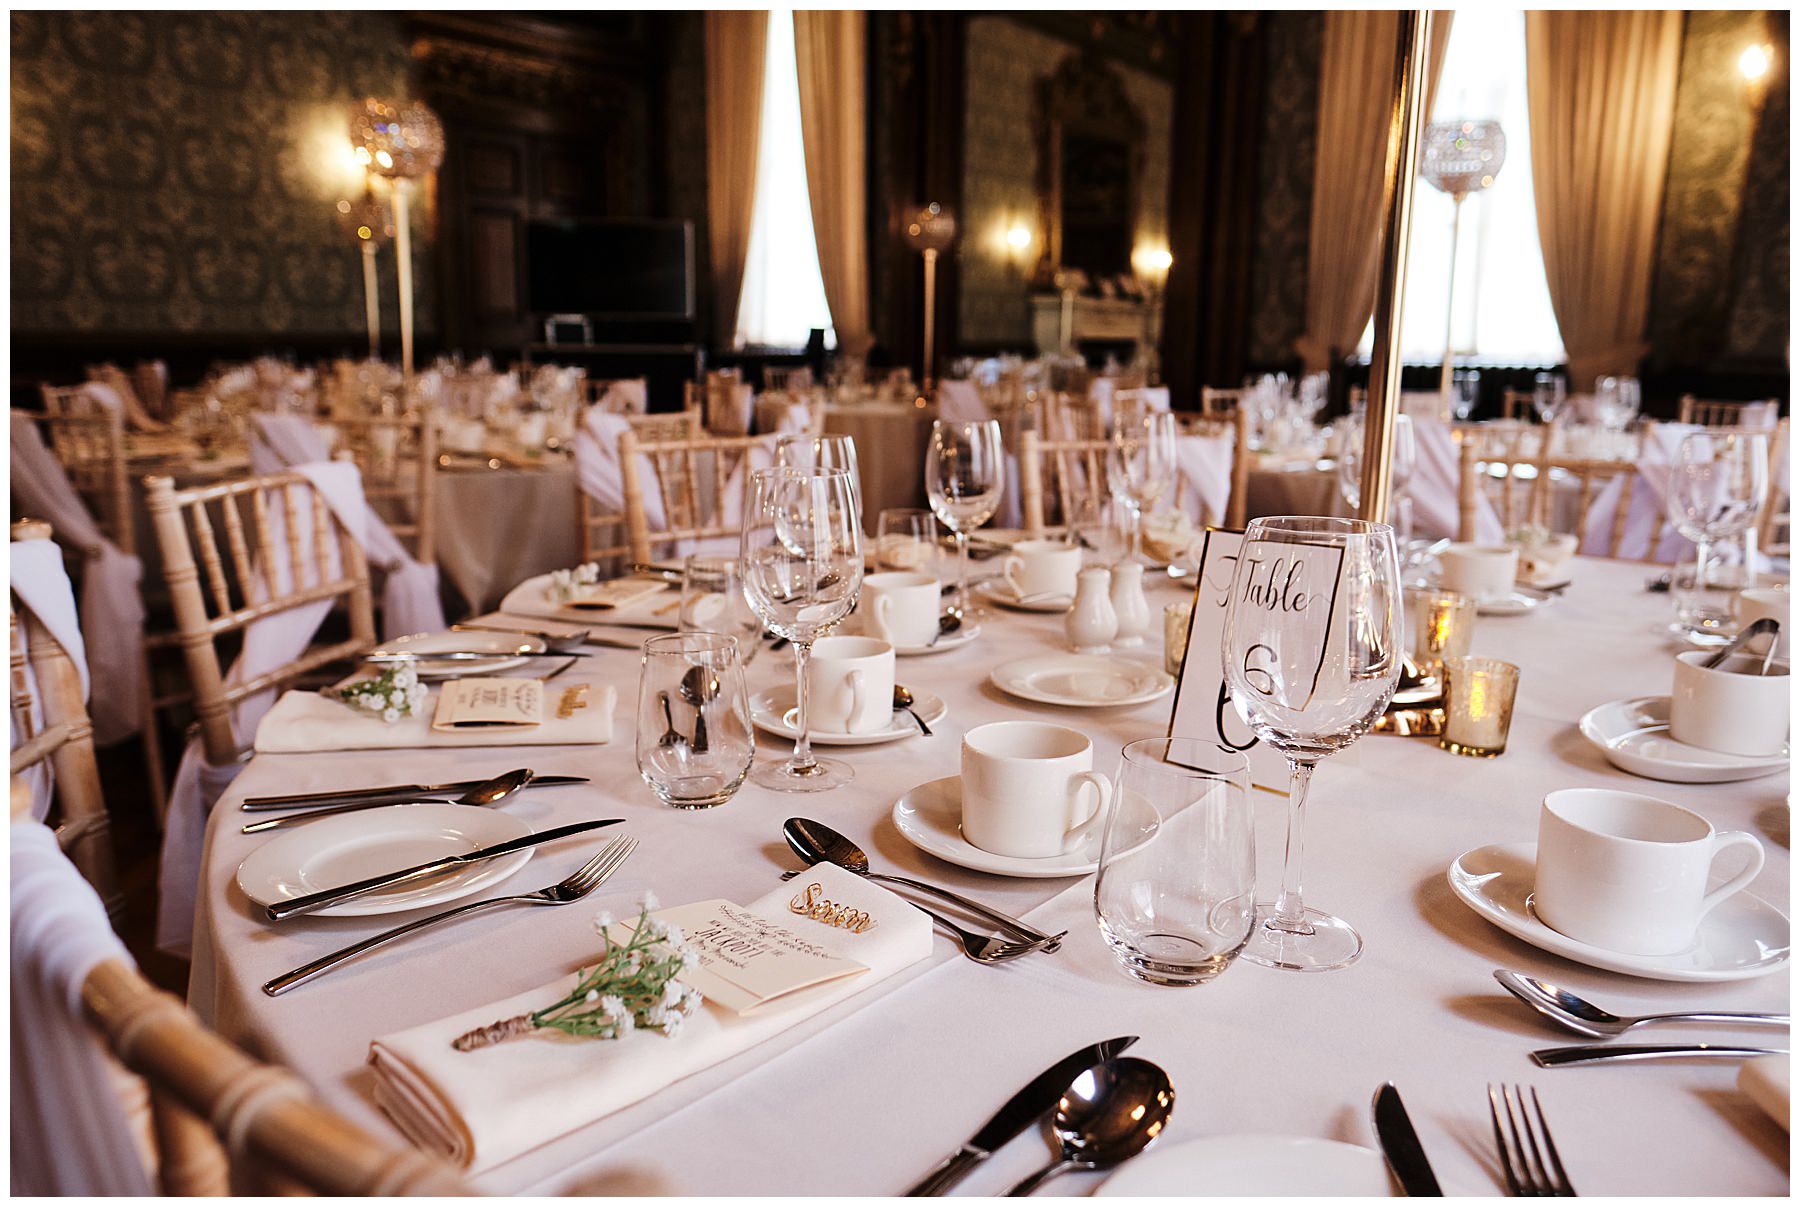 Idyllic setting and styling for the wedding breakfast at Hawkstone Hall in Shrewsbury by Documentary Wedding Photographer Stuart James